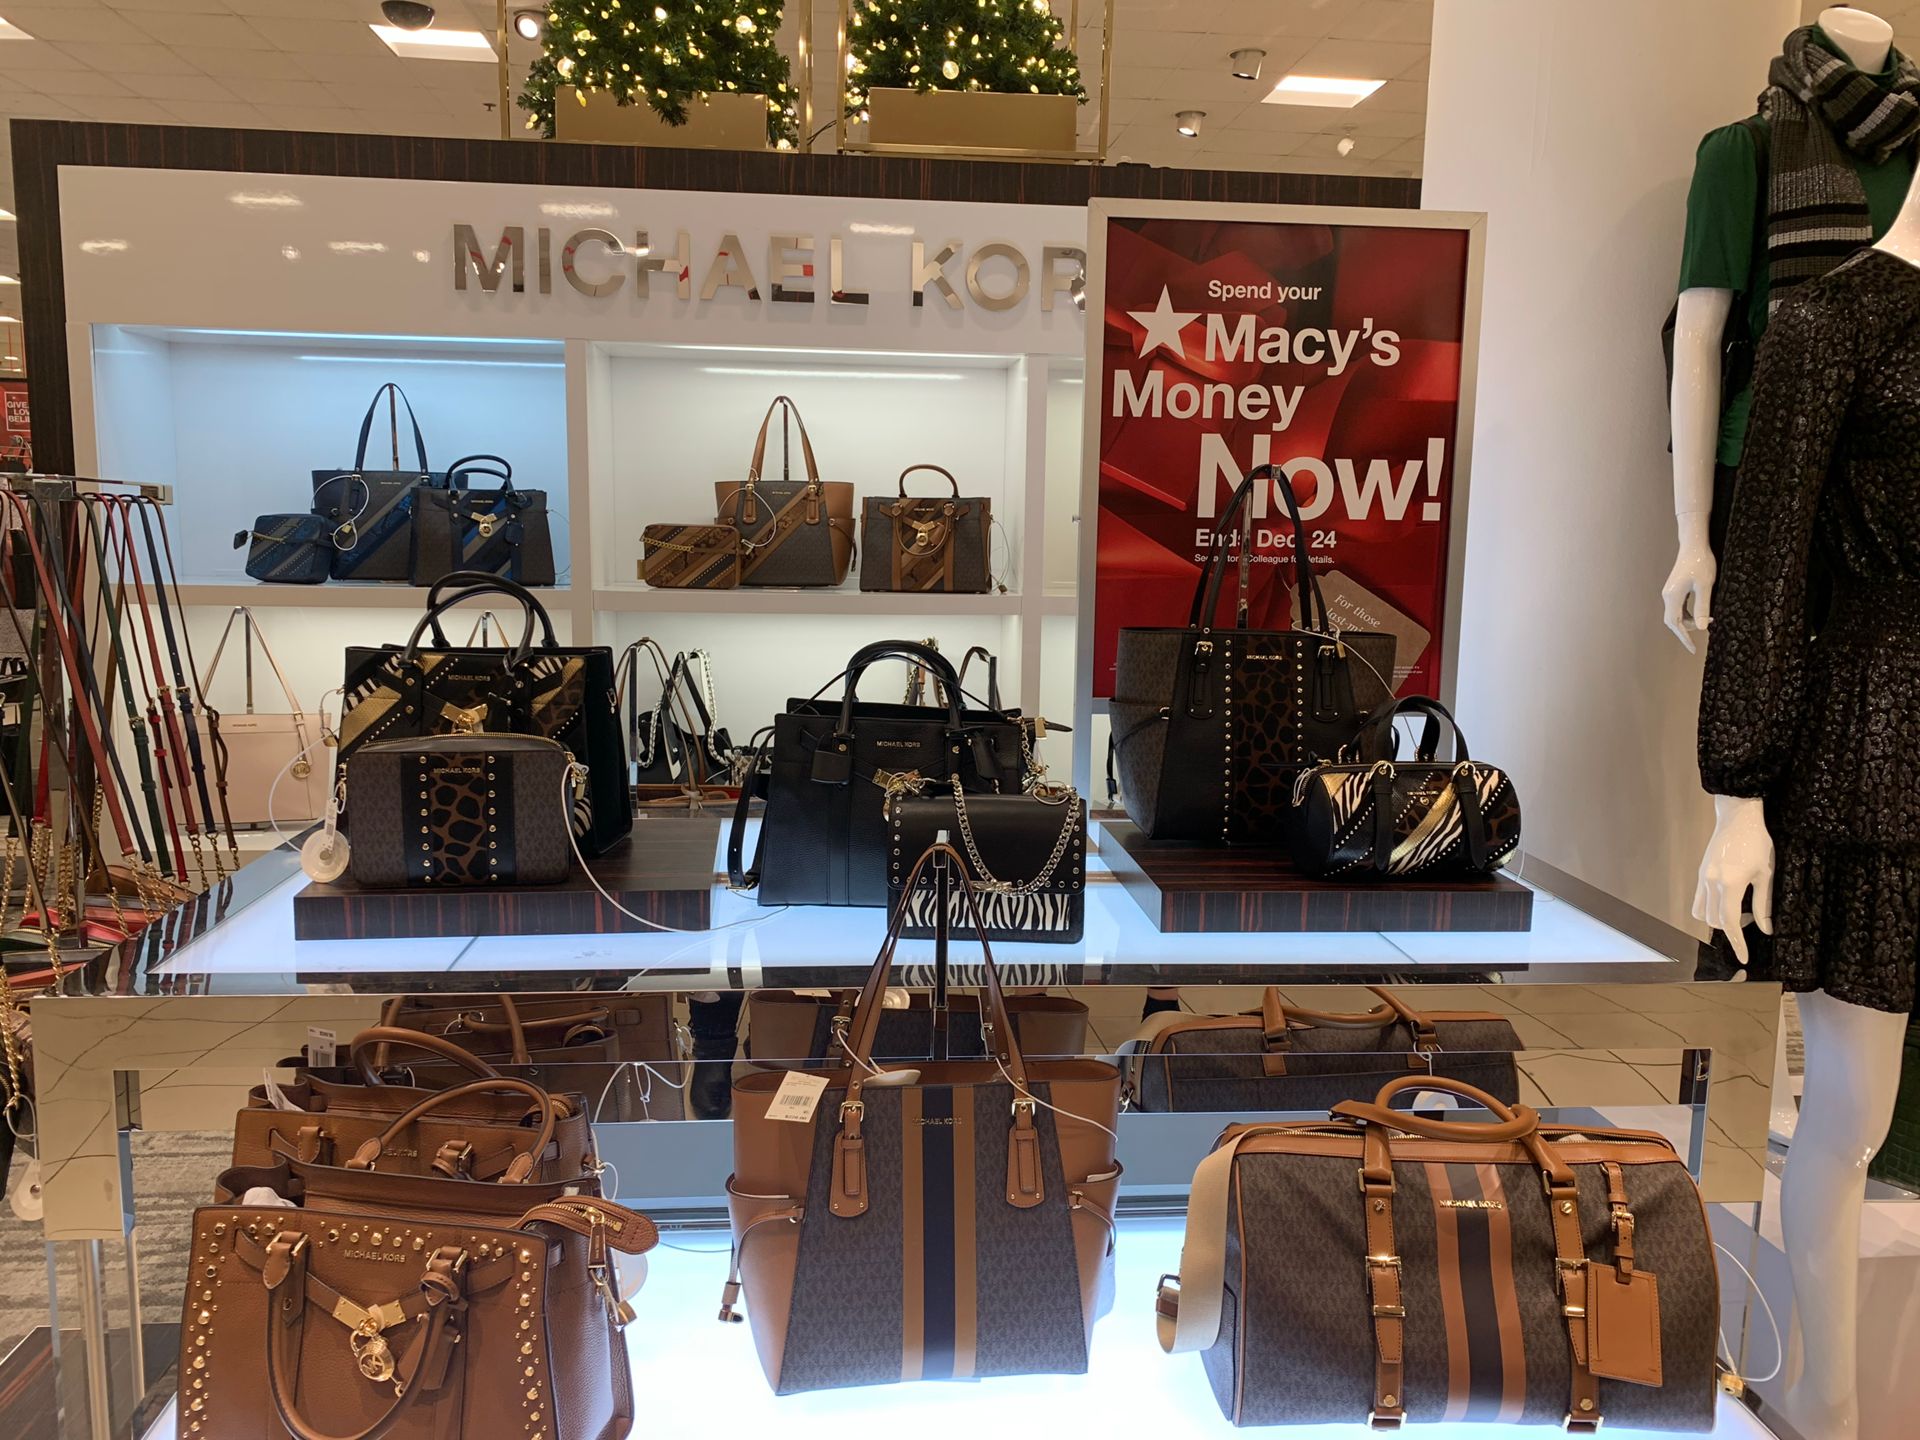 MICHAEL KORS BAGS AT MACYS Shop With Me 2020 